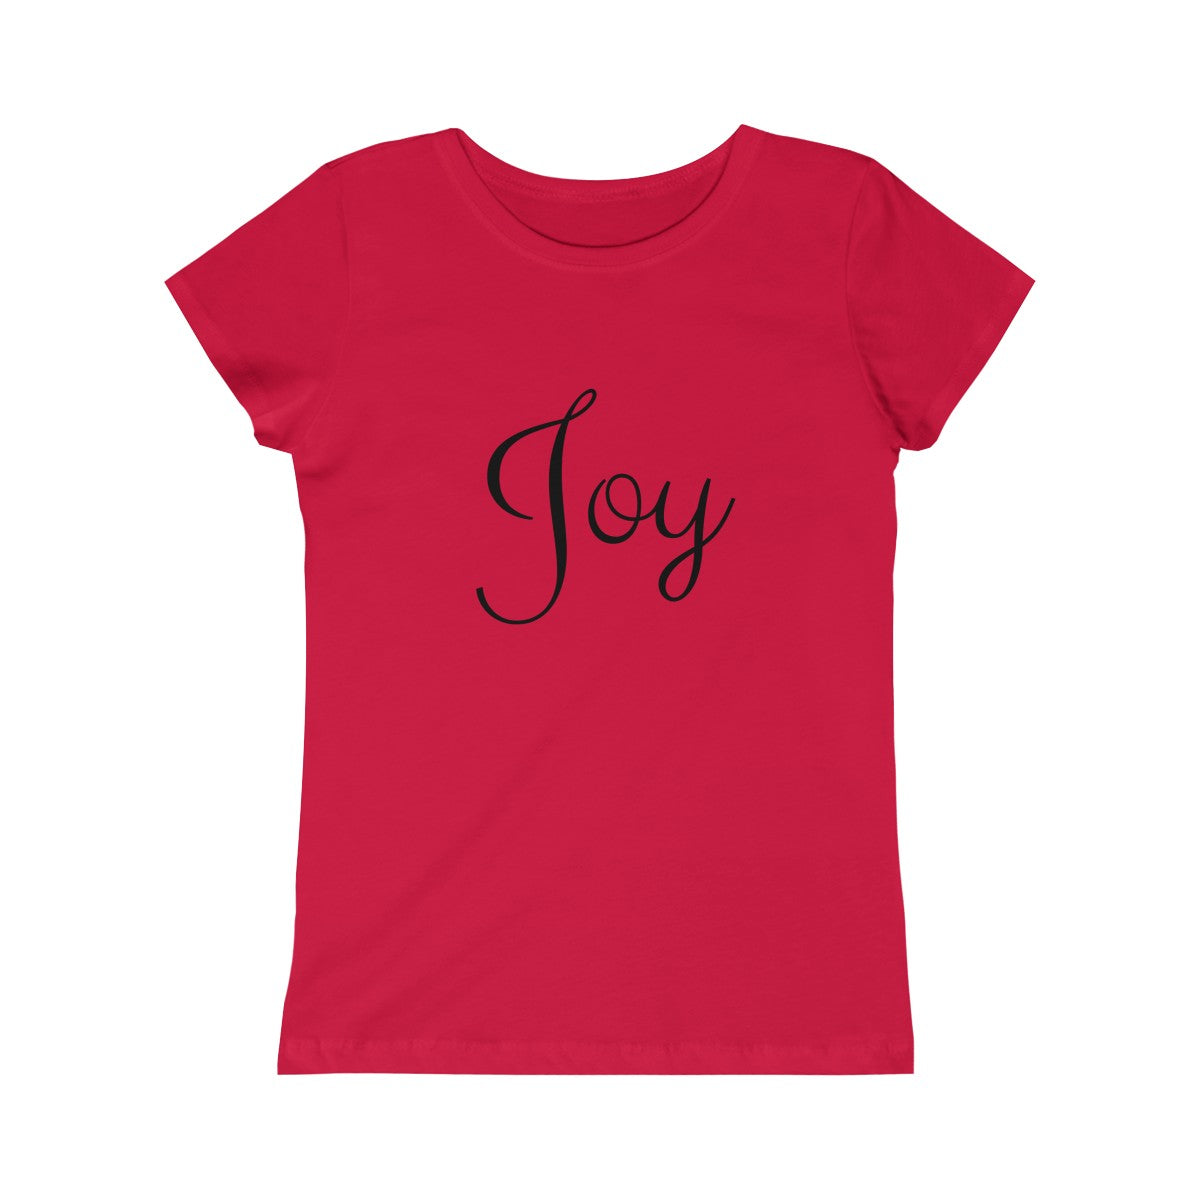 "Joy" Girls Tee